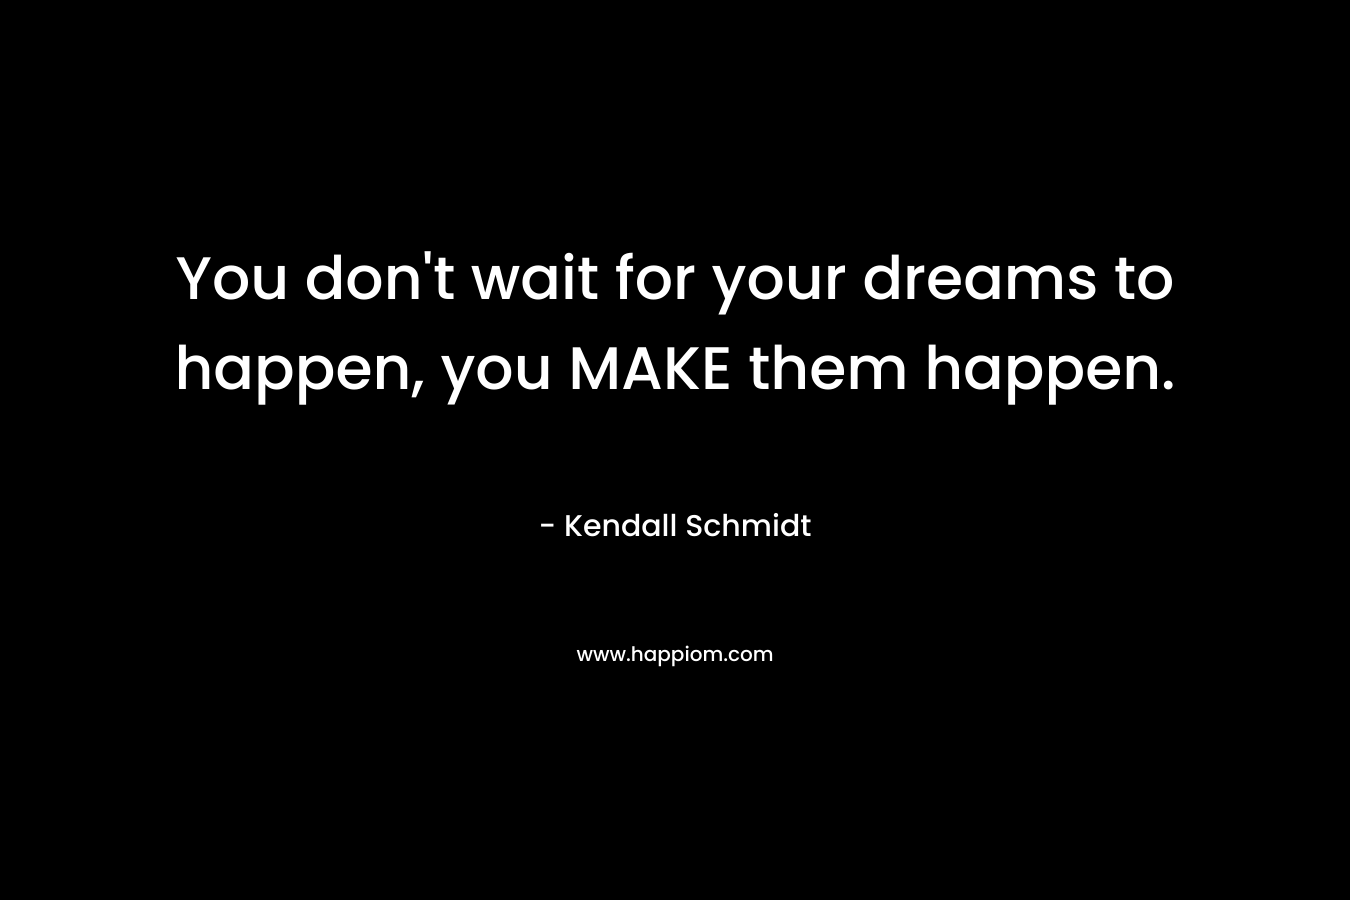 You don't wait for your dreams to happen, you MAKE them happen.